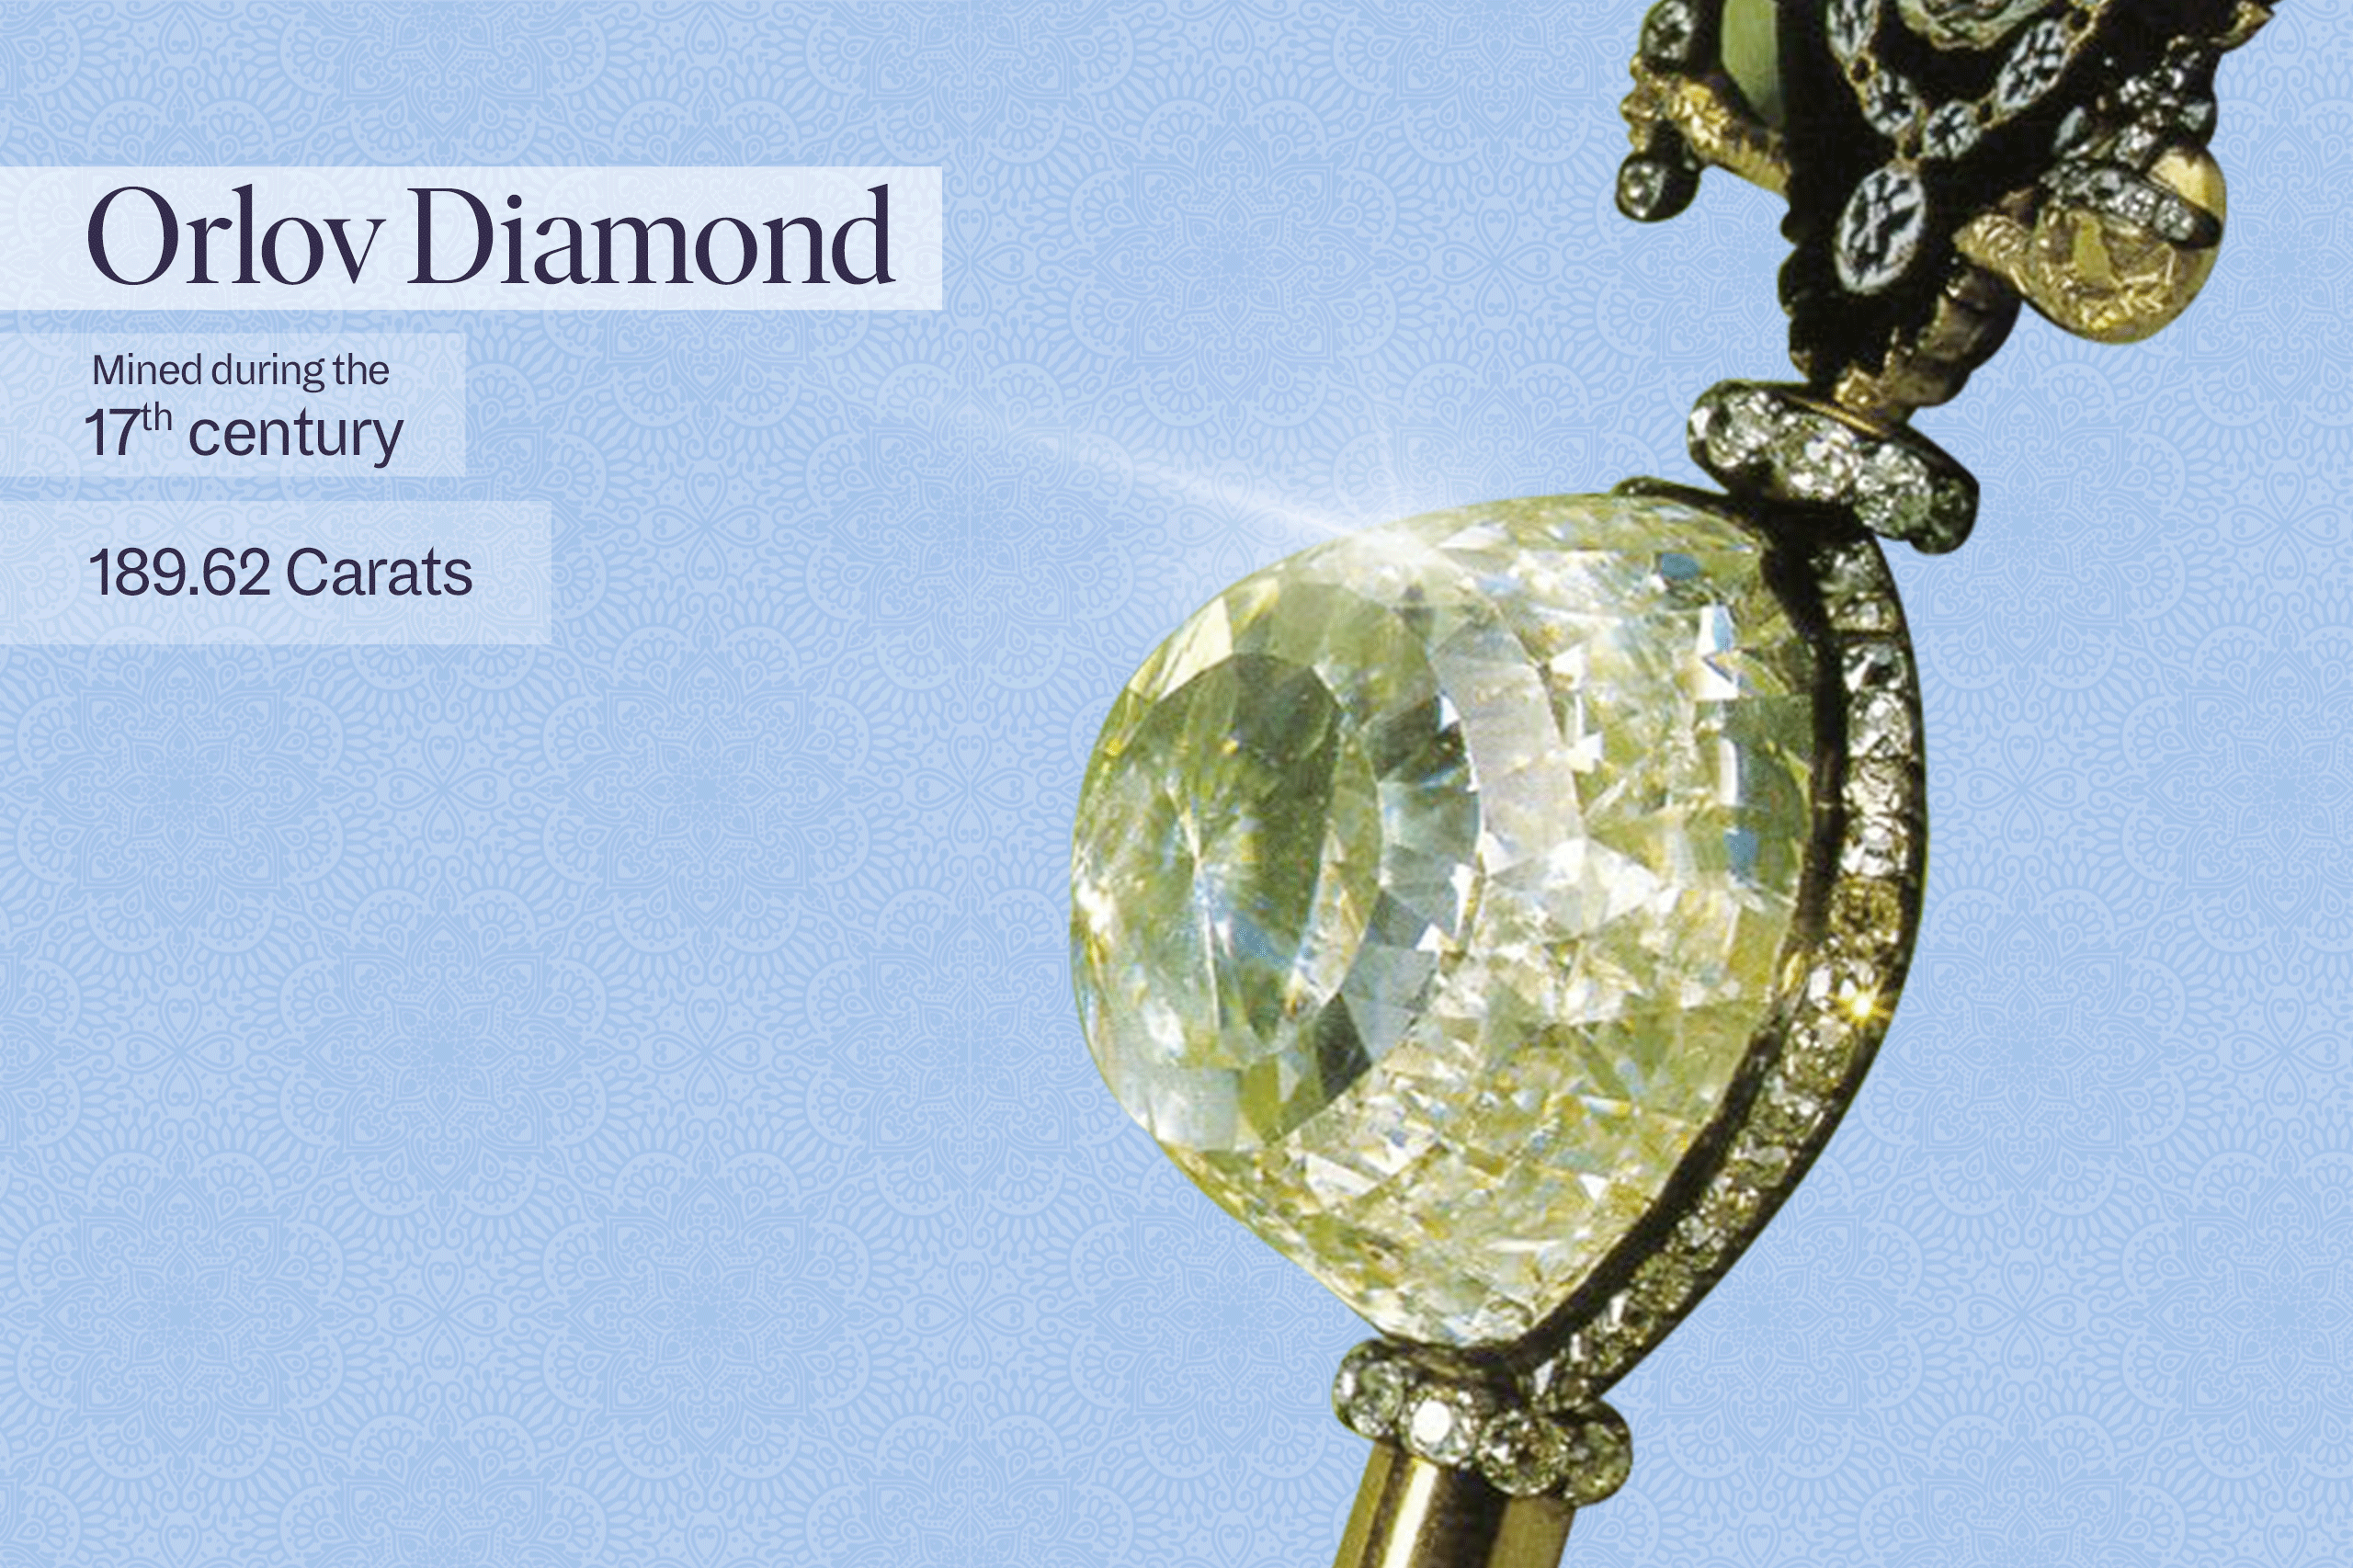 Orlov Diamond: 17th Century Mined Gem, Approximately 189.62 Carats